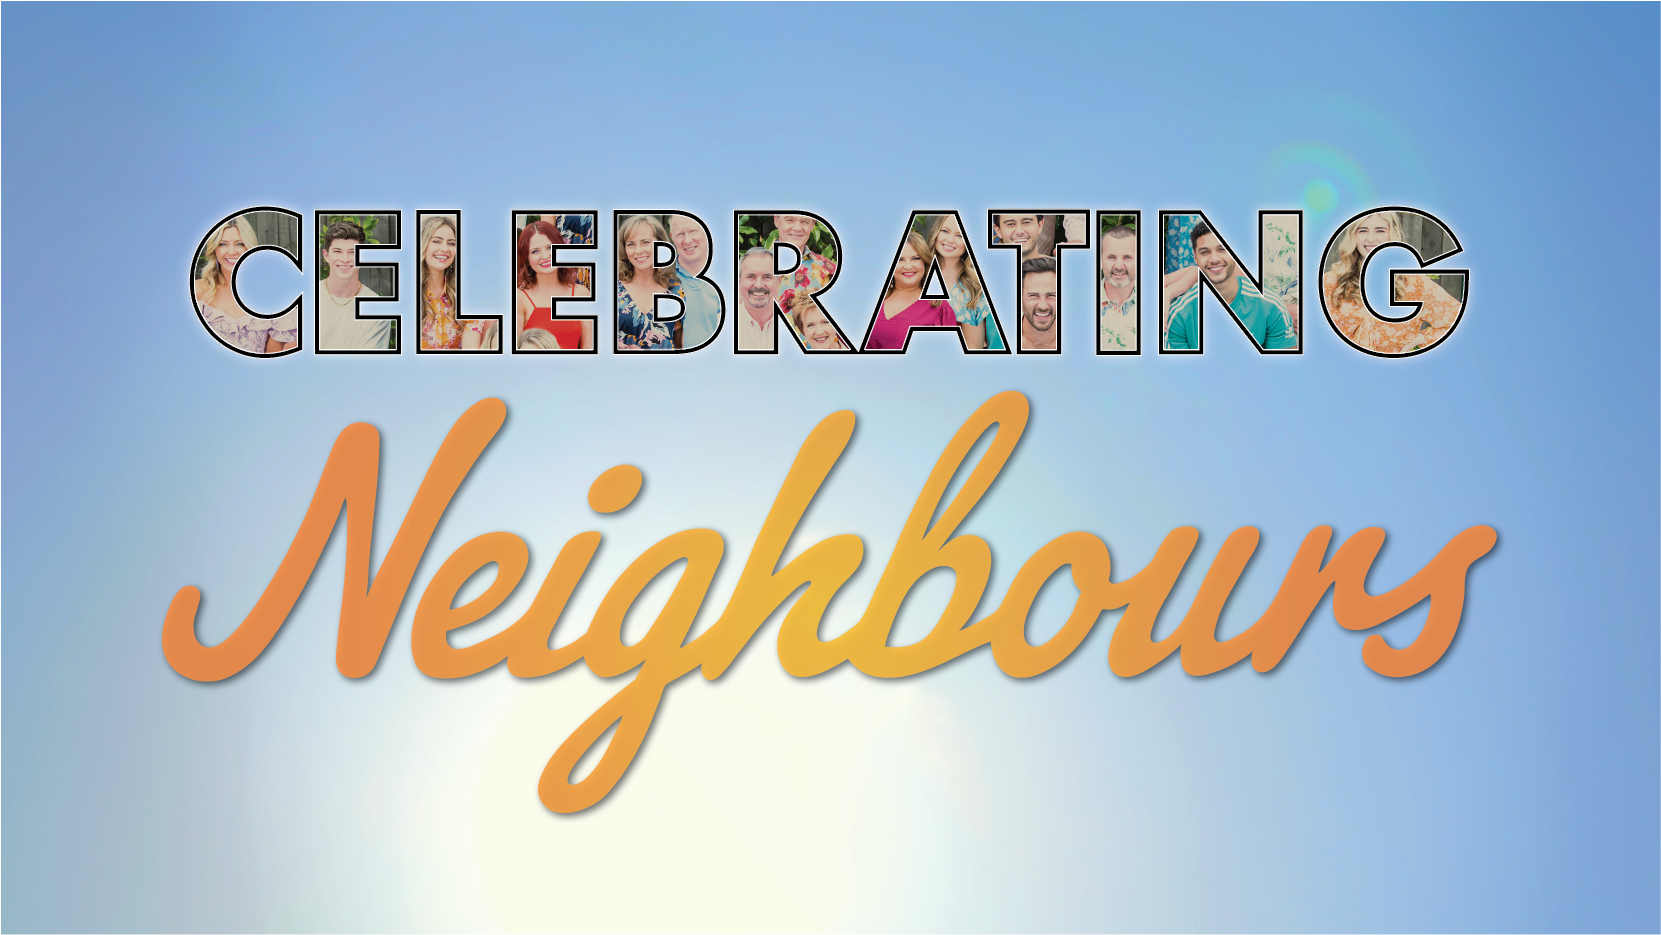 NEWS | Popular Australian soap Neighbours to cease production in June it has been confirmed